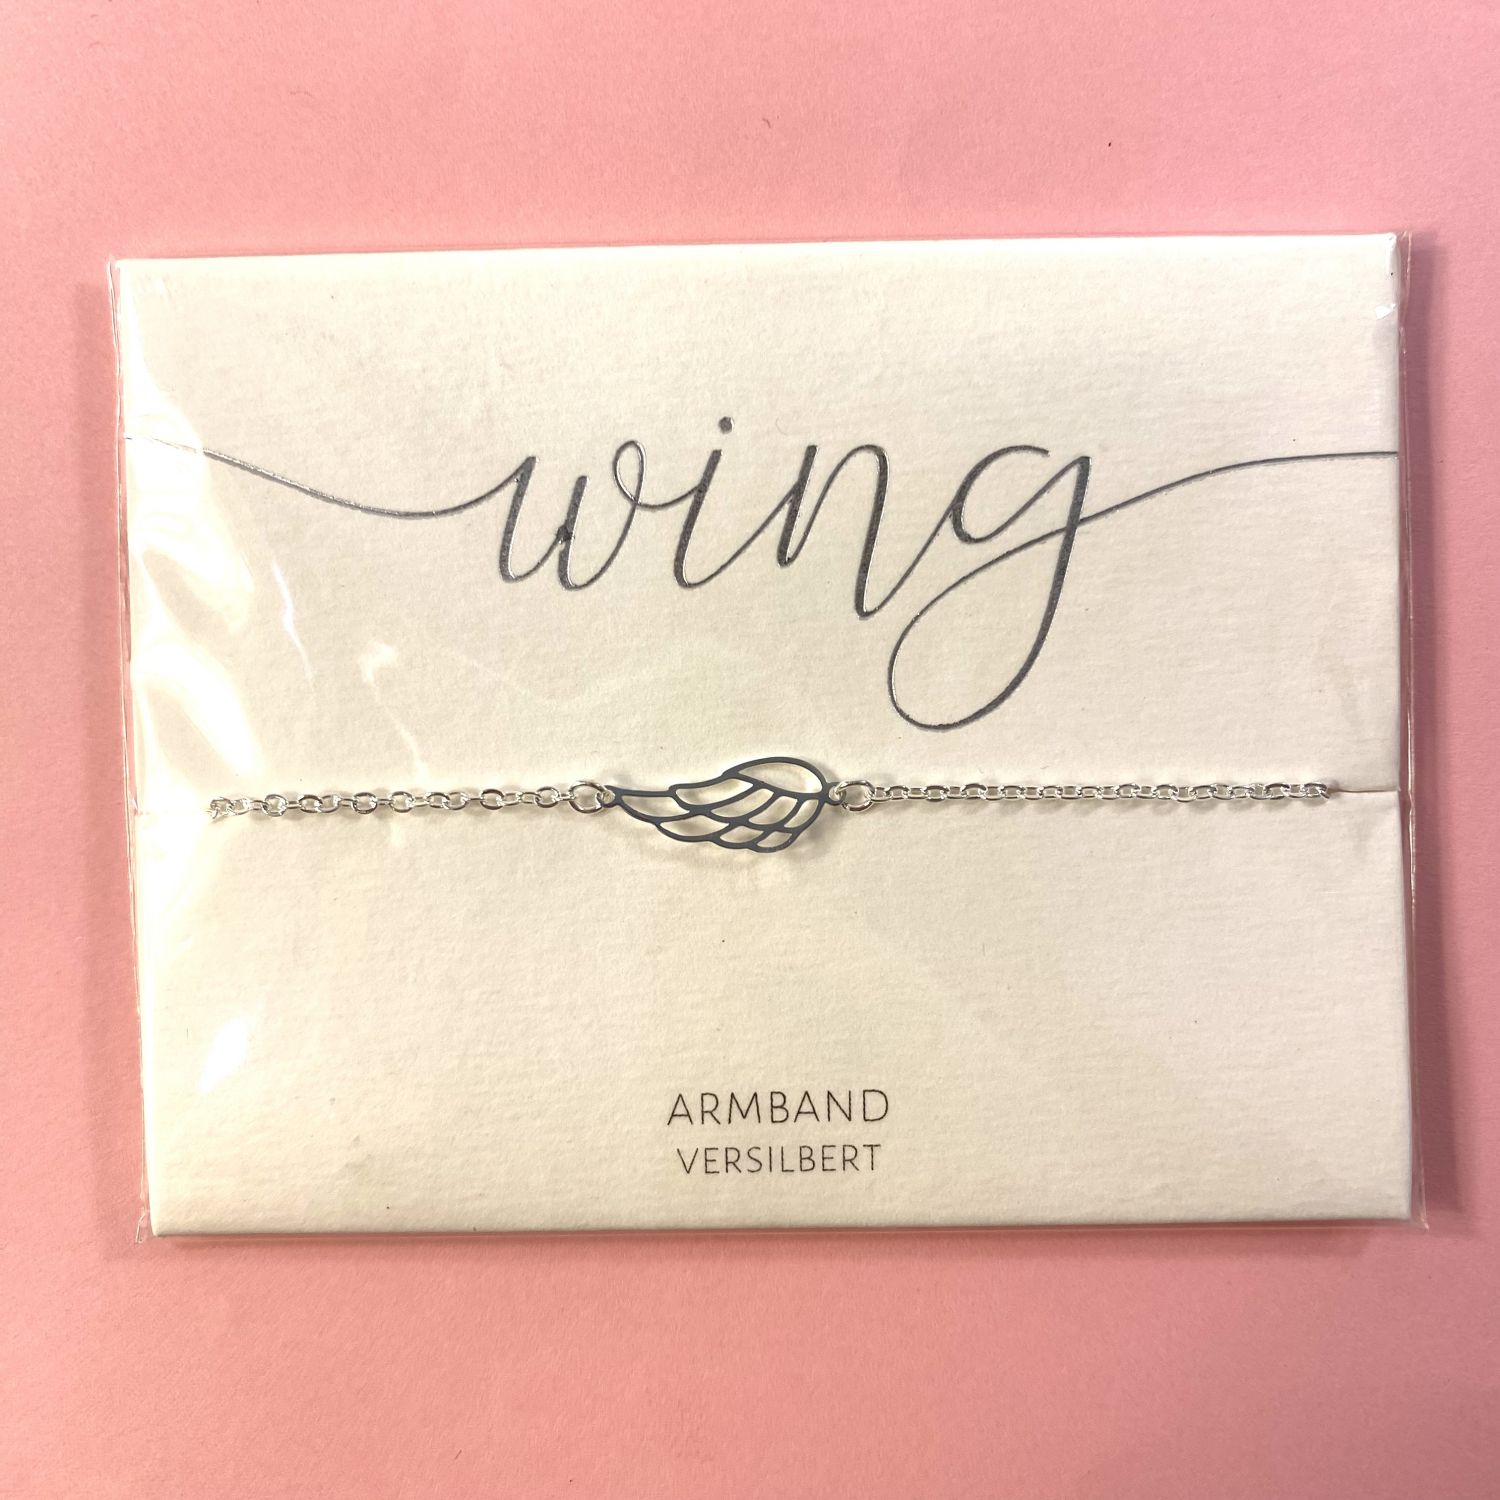 Armband "Wing" 999 feinversilbert